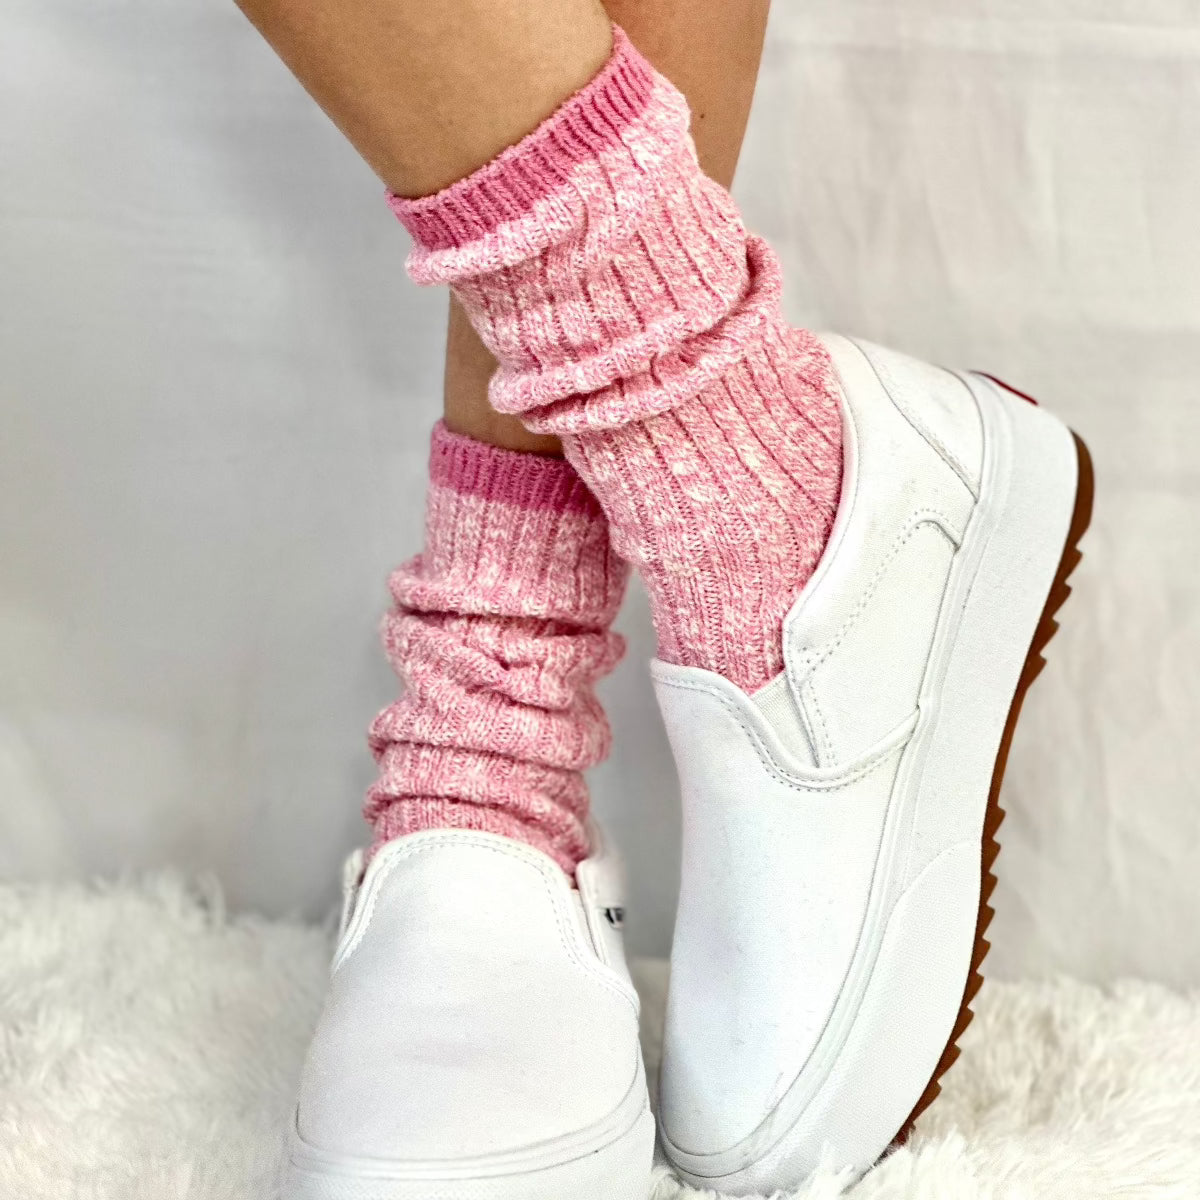 PINK marled best short boot socks, cute fashion ankle socks women's, crew socks